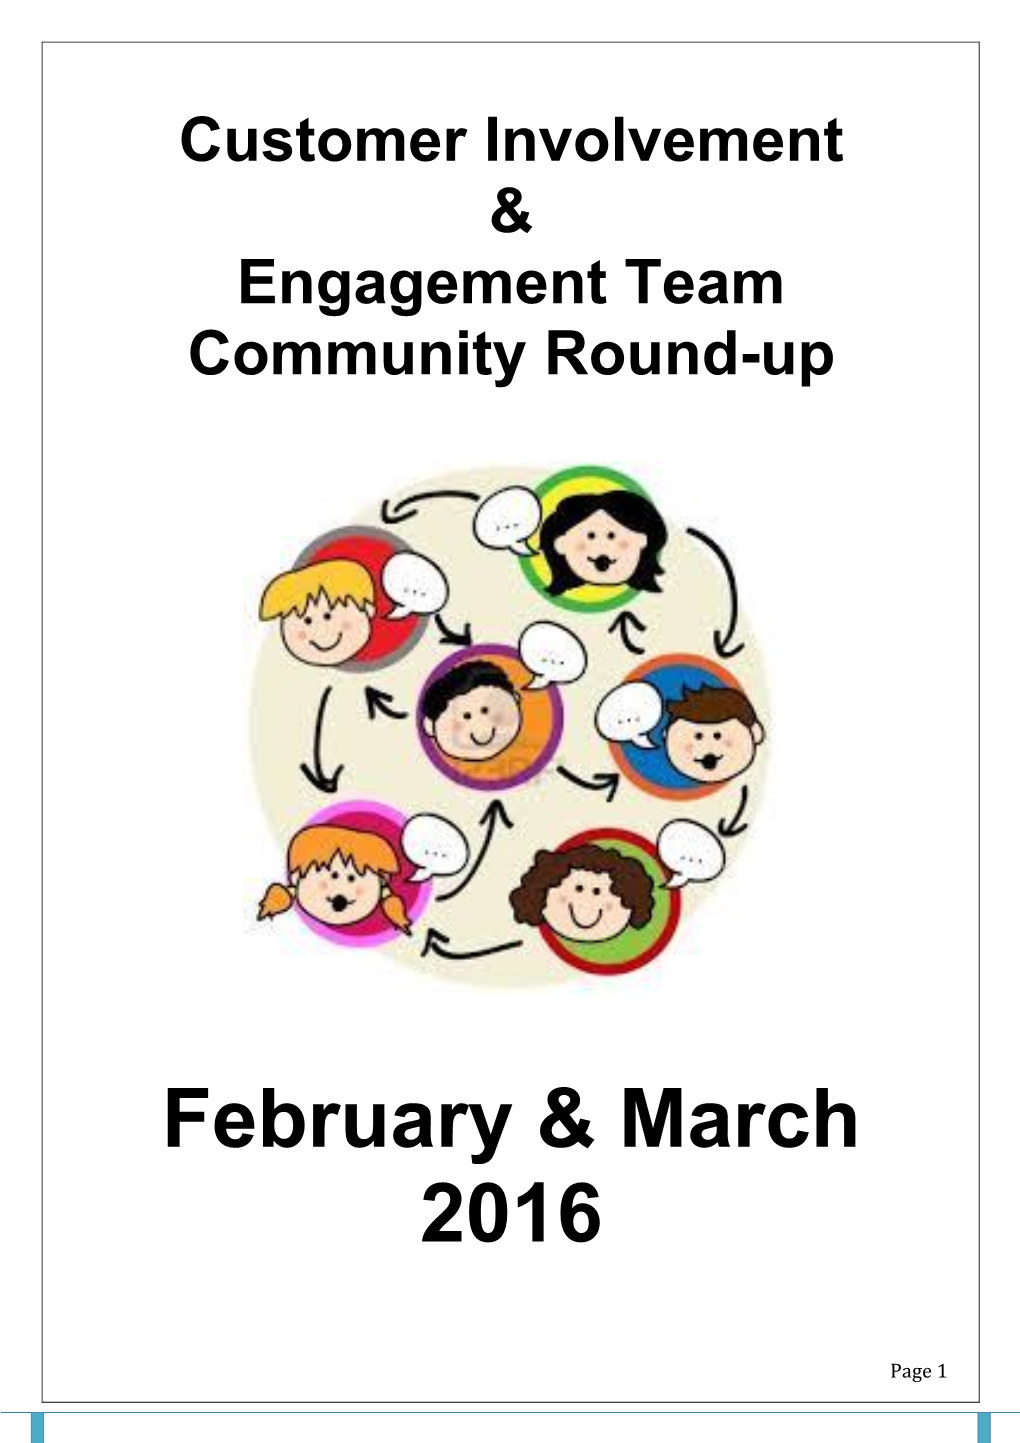 Customer Involvement & Engagement Team Community Round-Up